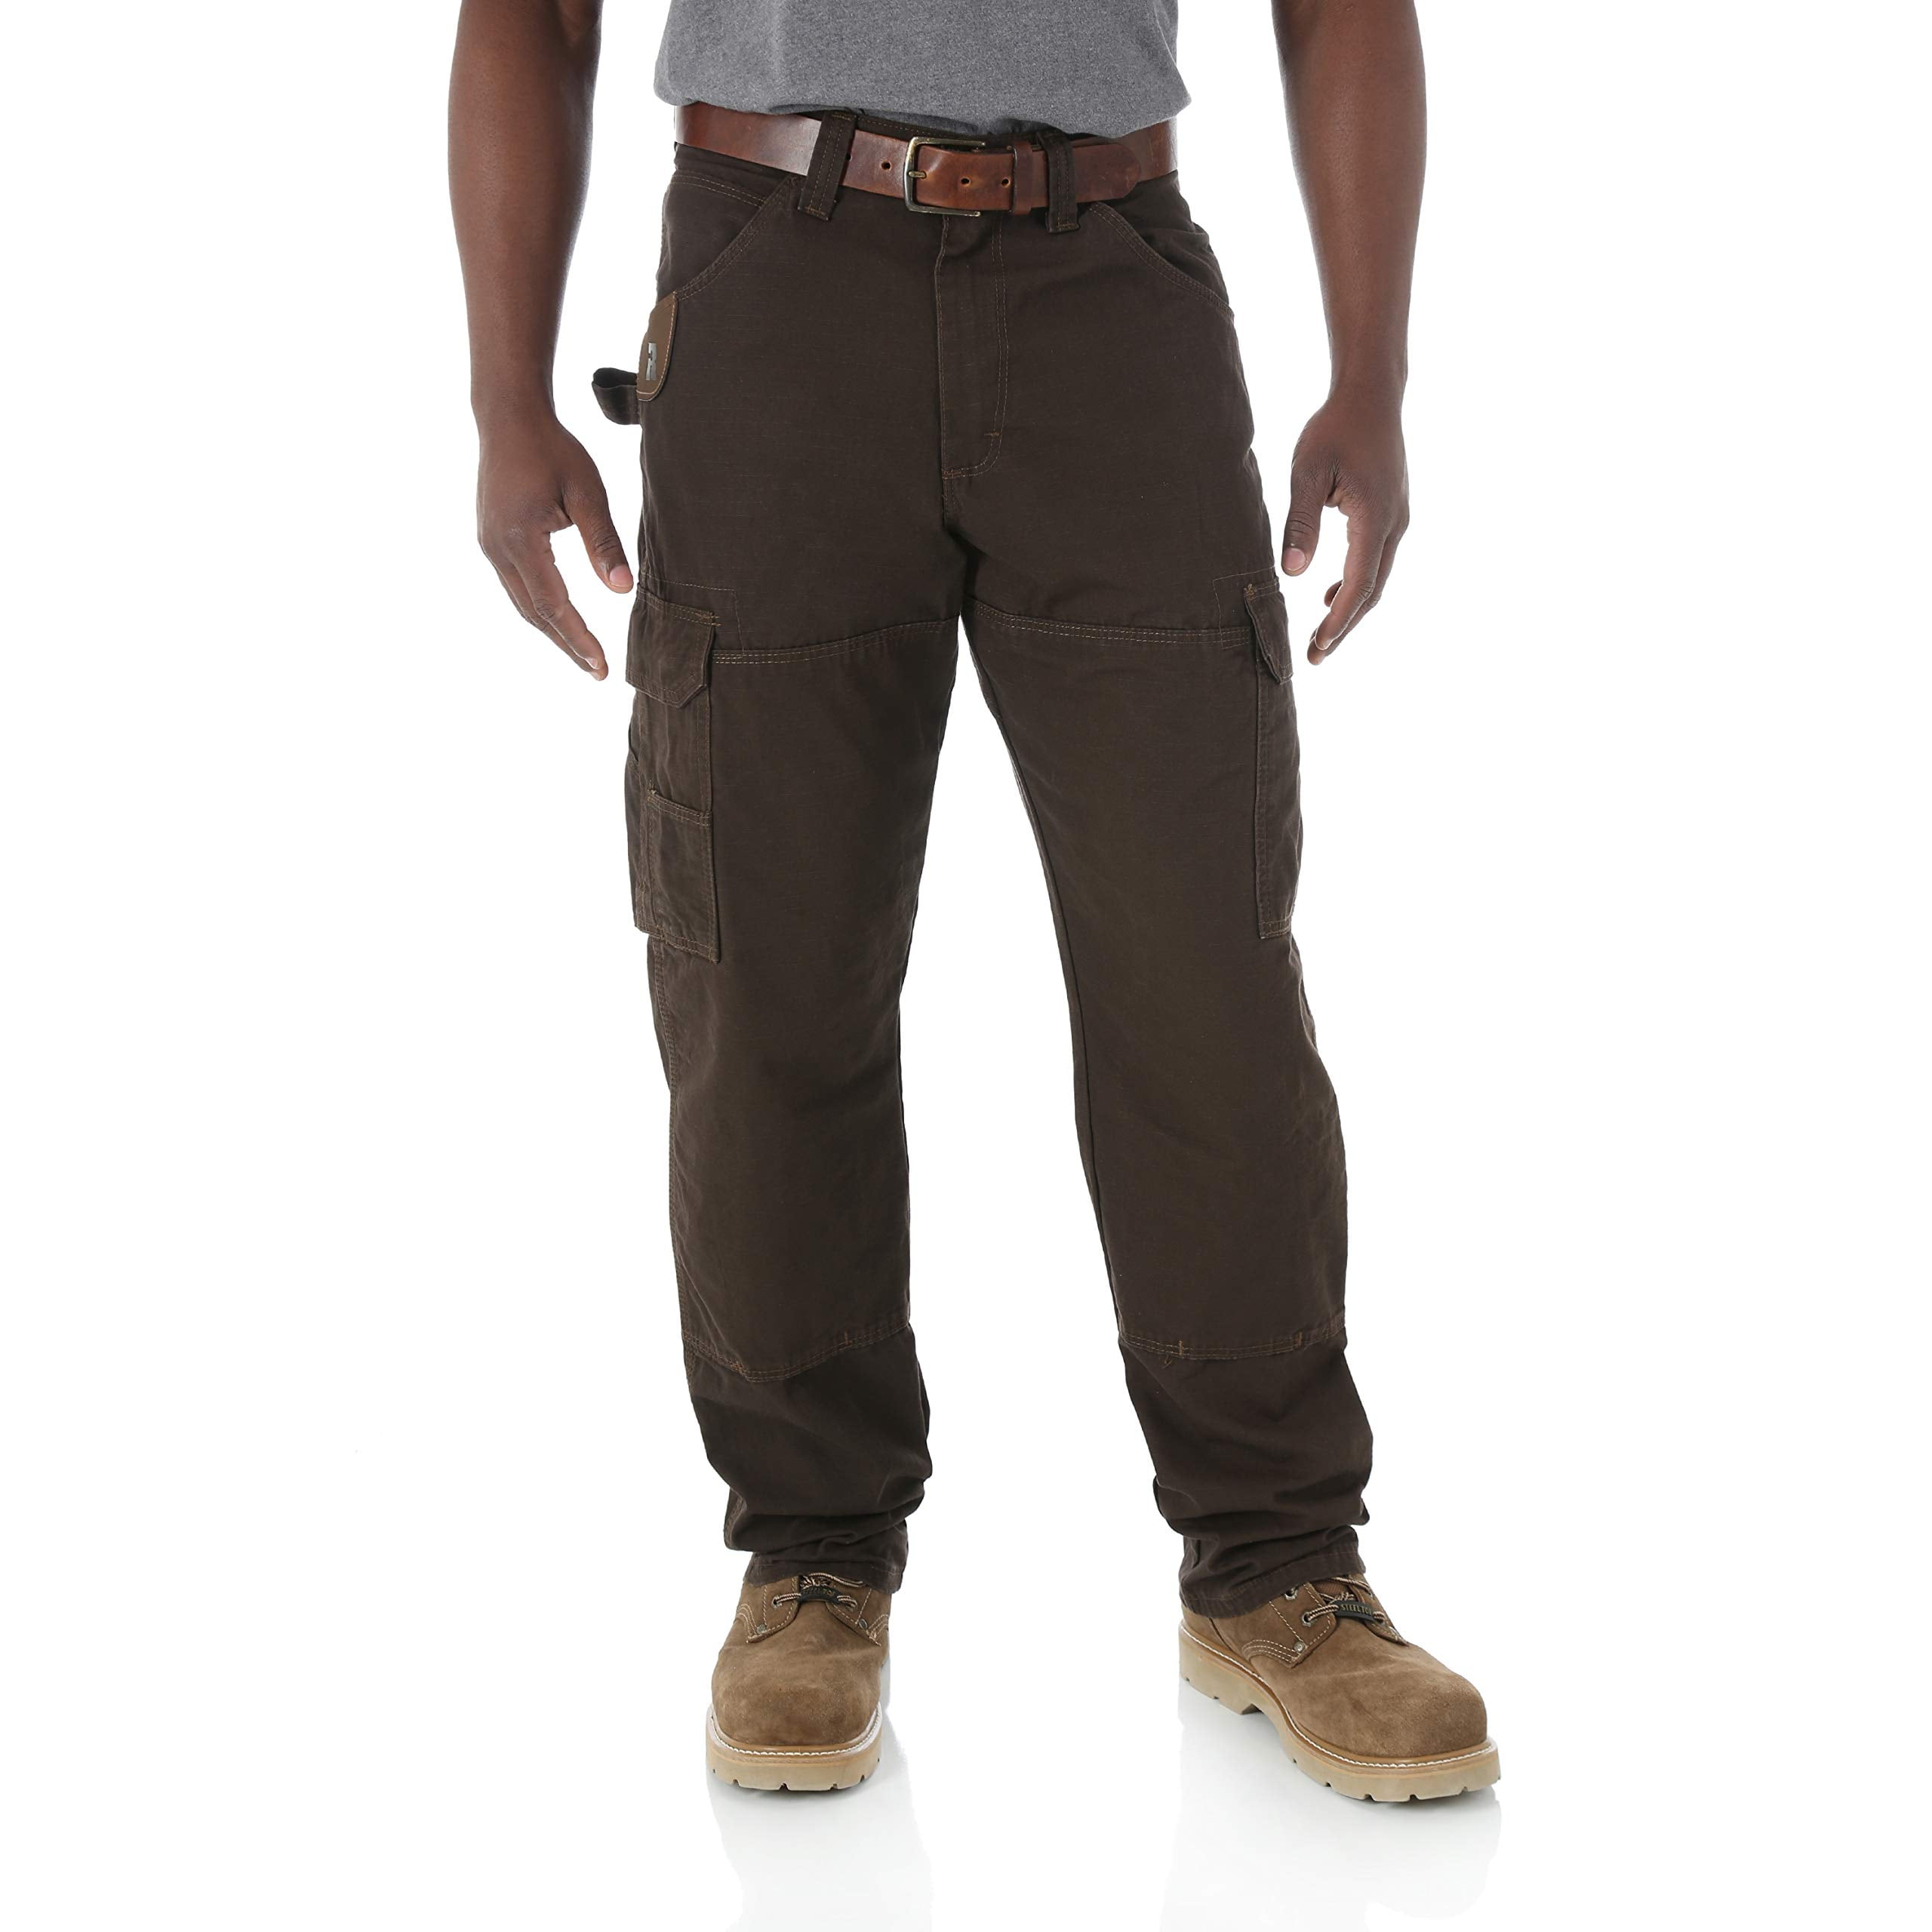 Wrangler Riggs - Ranger - Pant by Dark Brown 50x32 Workwear - 3W060